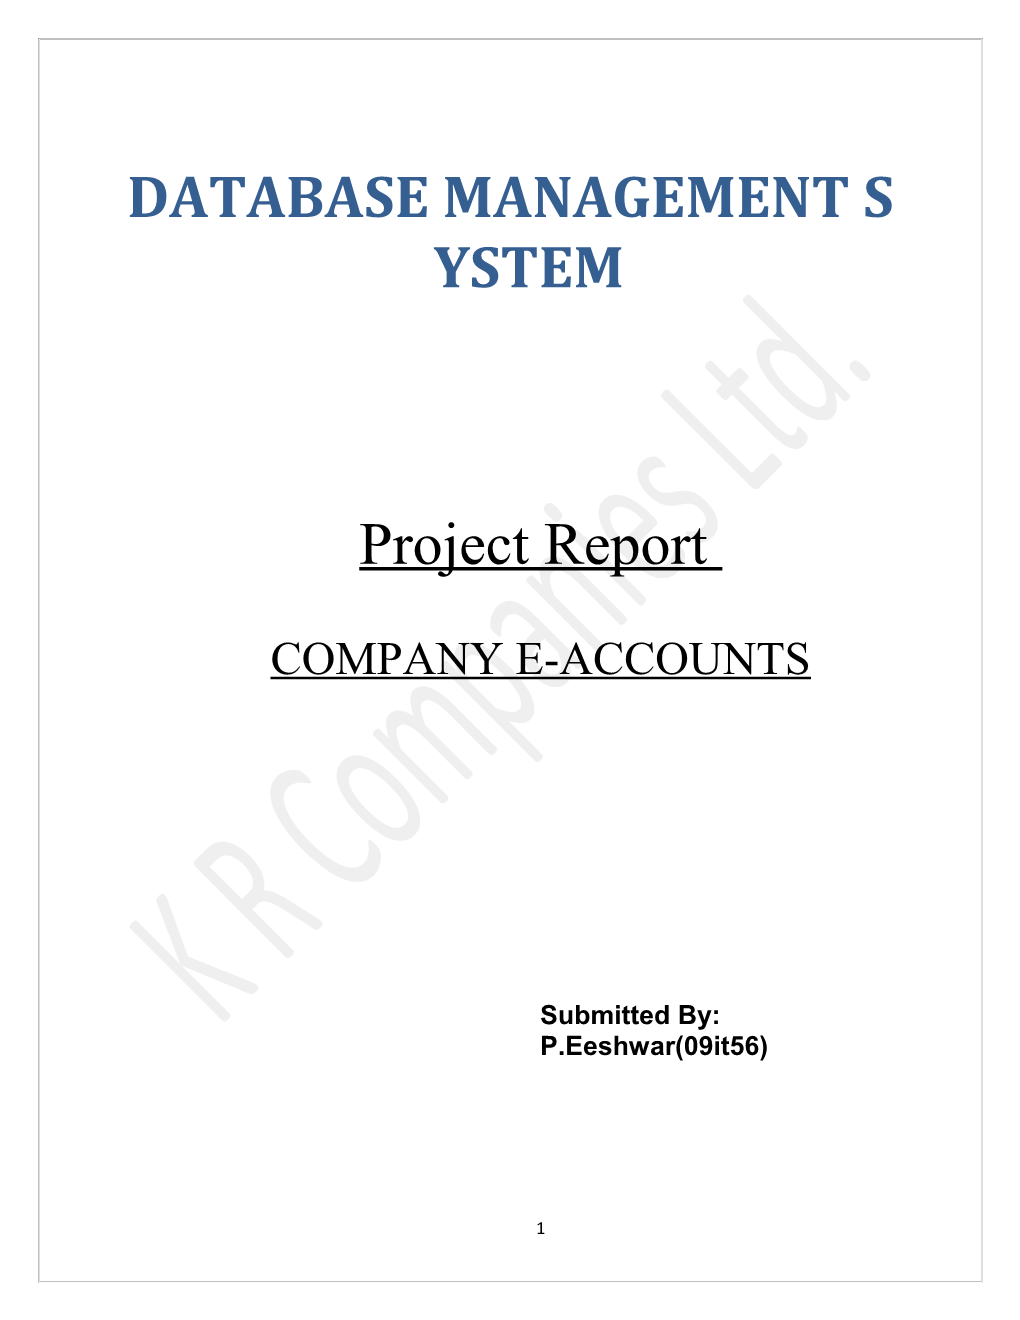 Database Management System s1